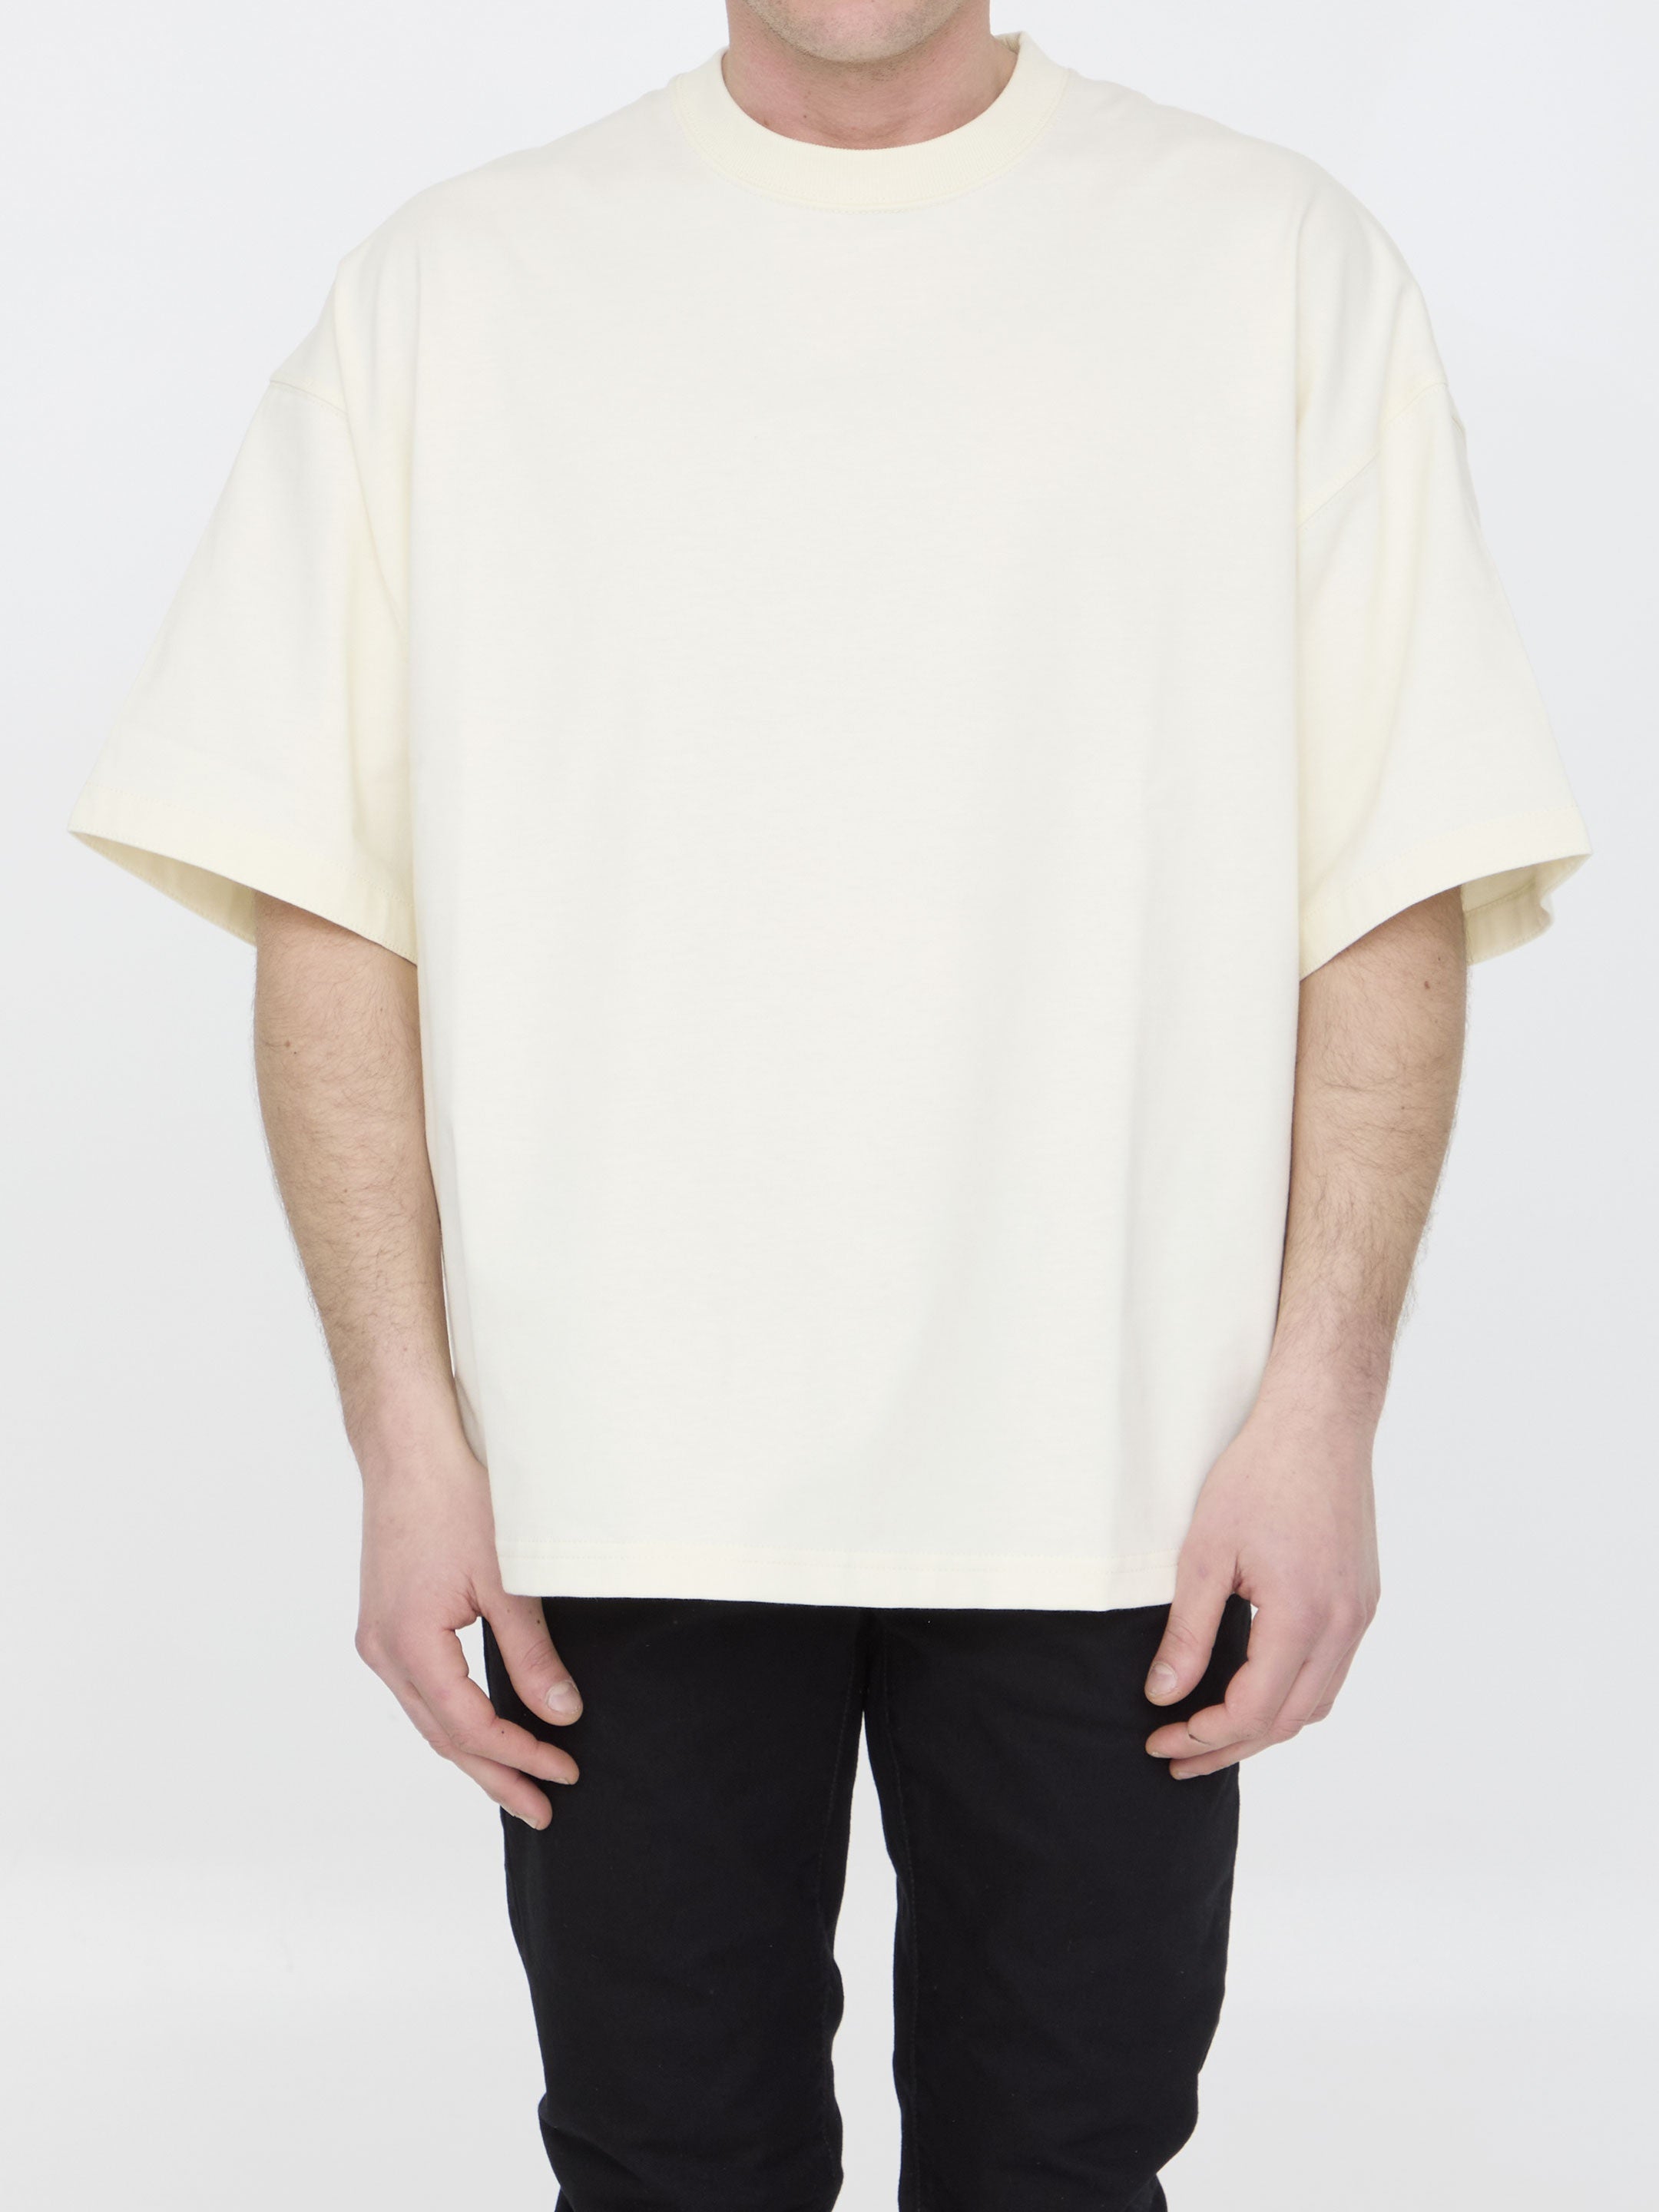 BOTTEGA-VENETA-OUTLET-SALE-Cotton-t-shirt-Shirts-S-WHITE-ARCHIVE-COLLECTION.jpg